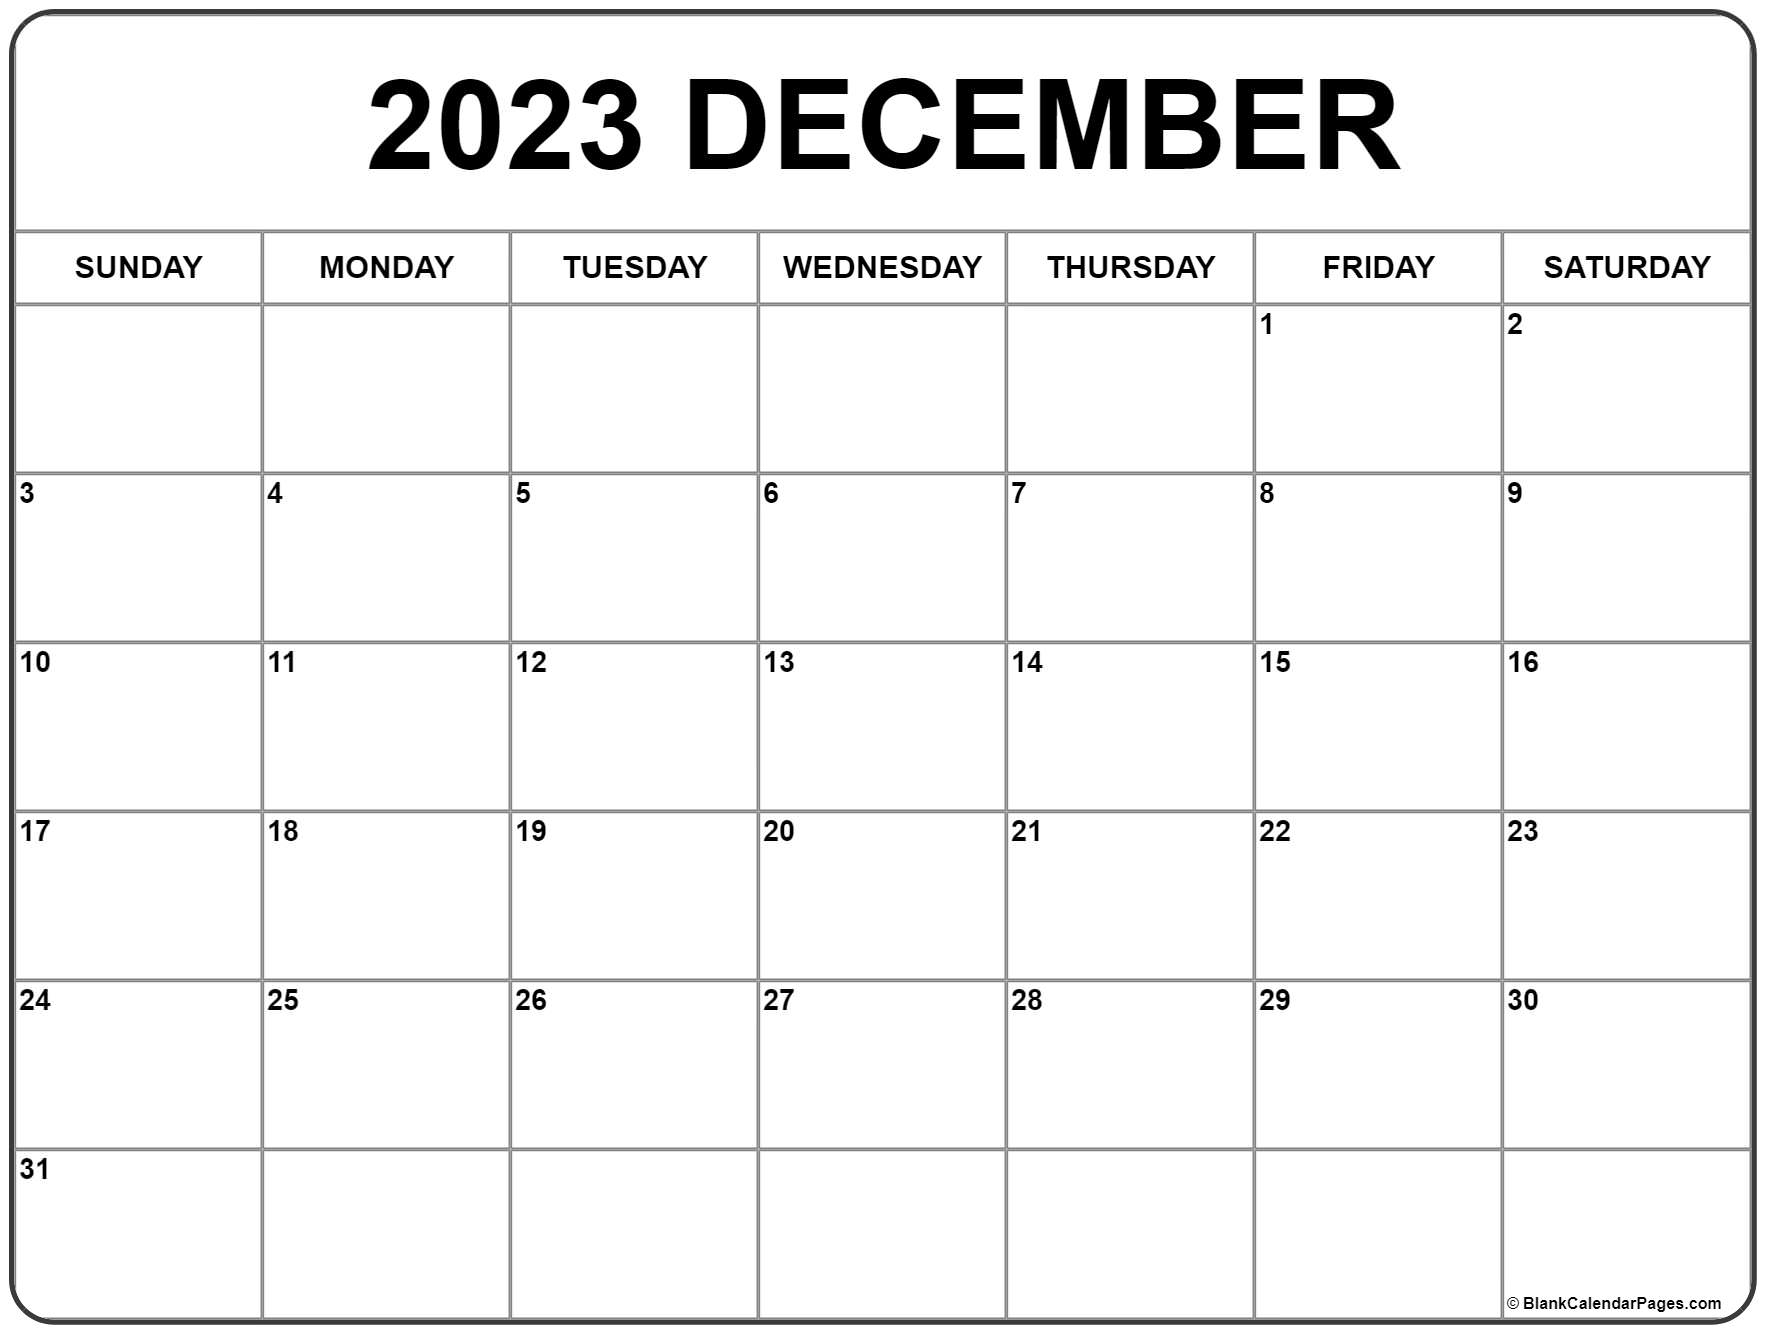 december-2023-calendar-page-get-latest-map-update